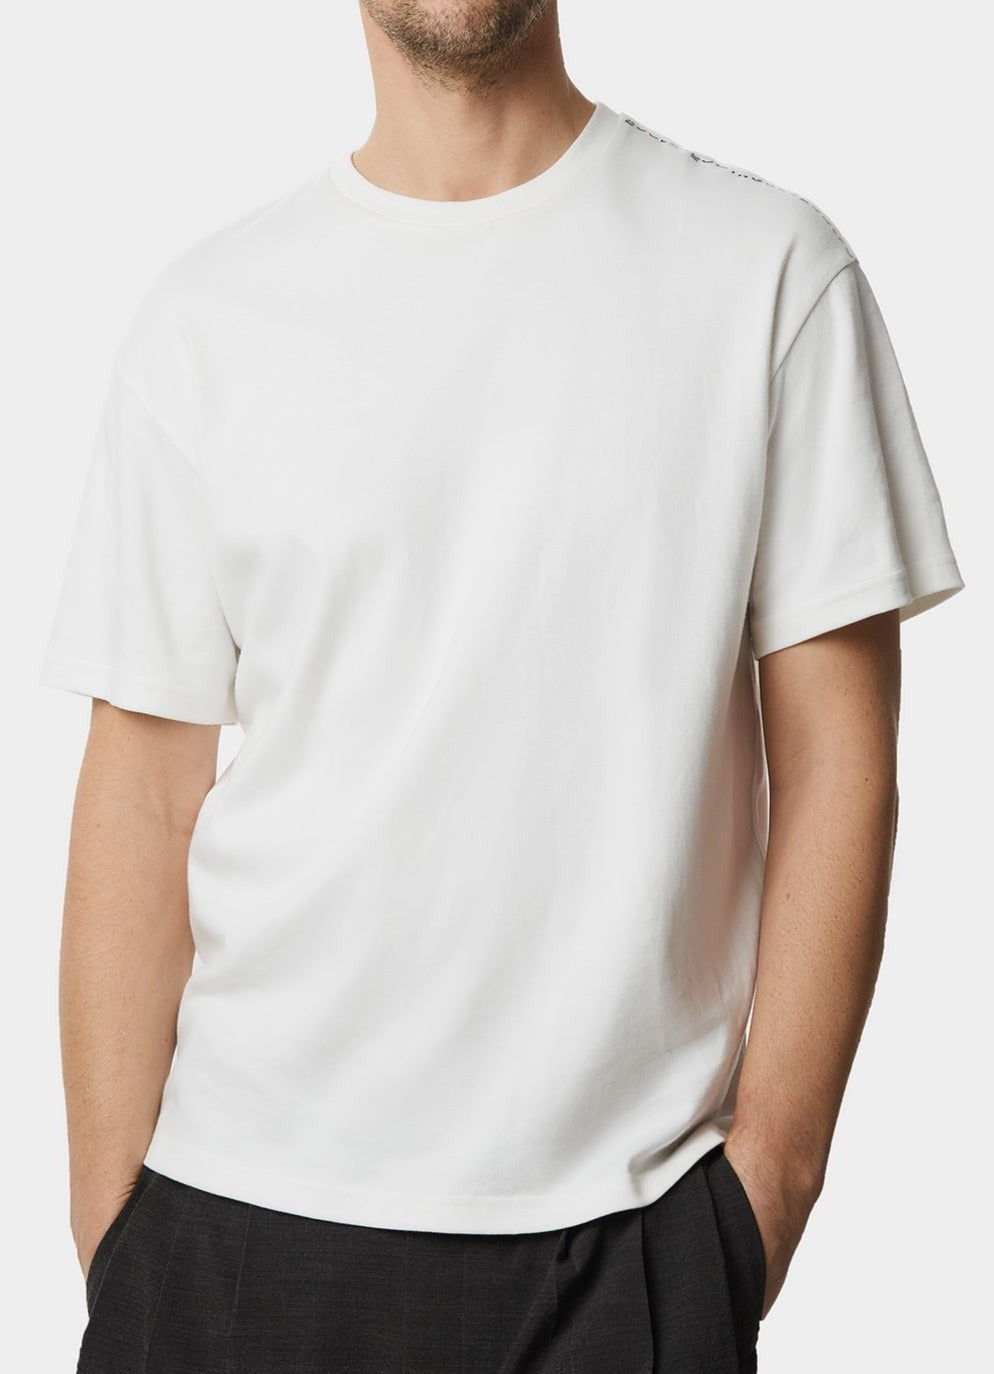 Men T-Shirt (Short Sleeve) | White Basic T-Shirt With Logo On Shoulder by Spanish designer Adolfo Dominguez